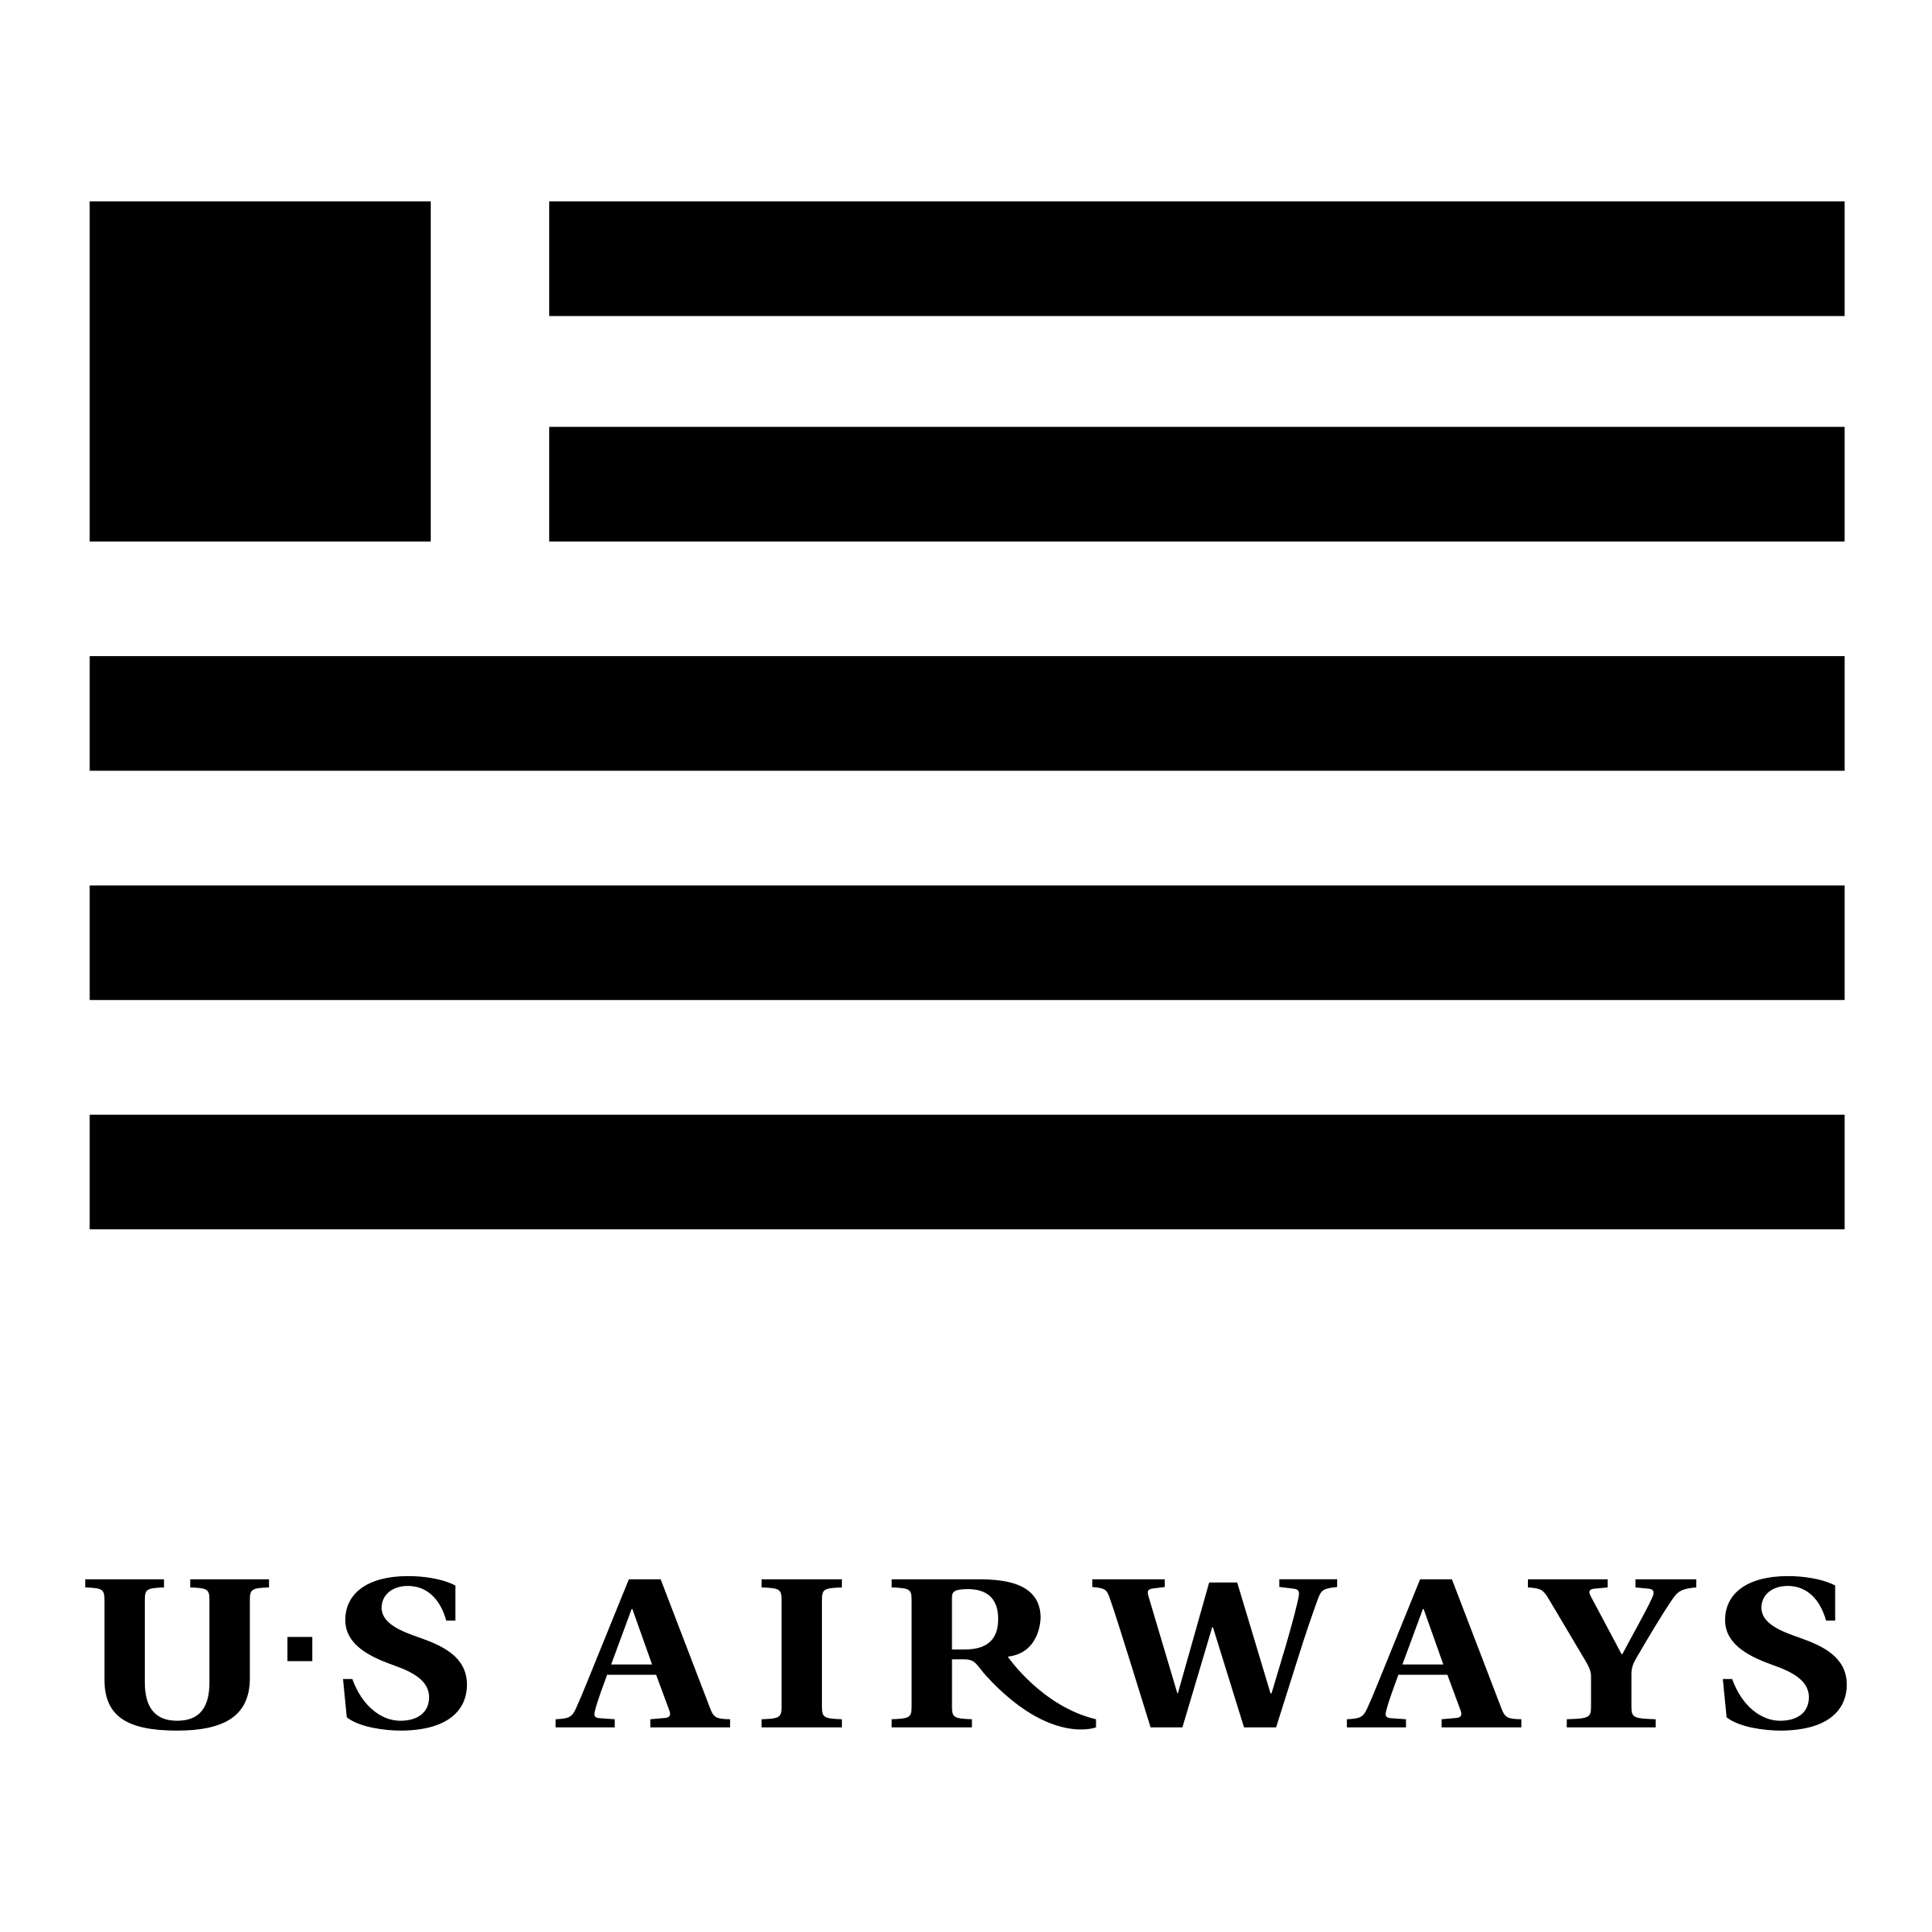 US Airways Logo - US Airways Logo PNG Transparent & SVG Vector - Freebie Supply